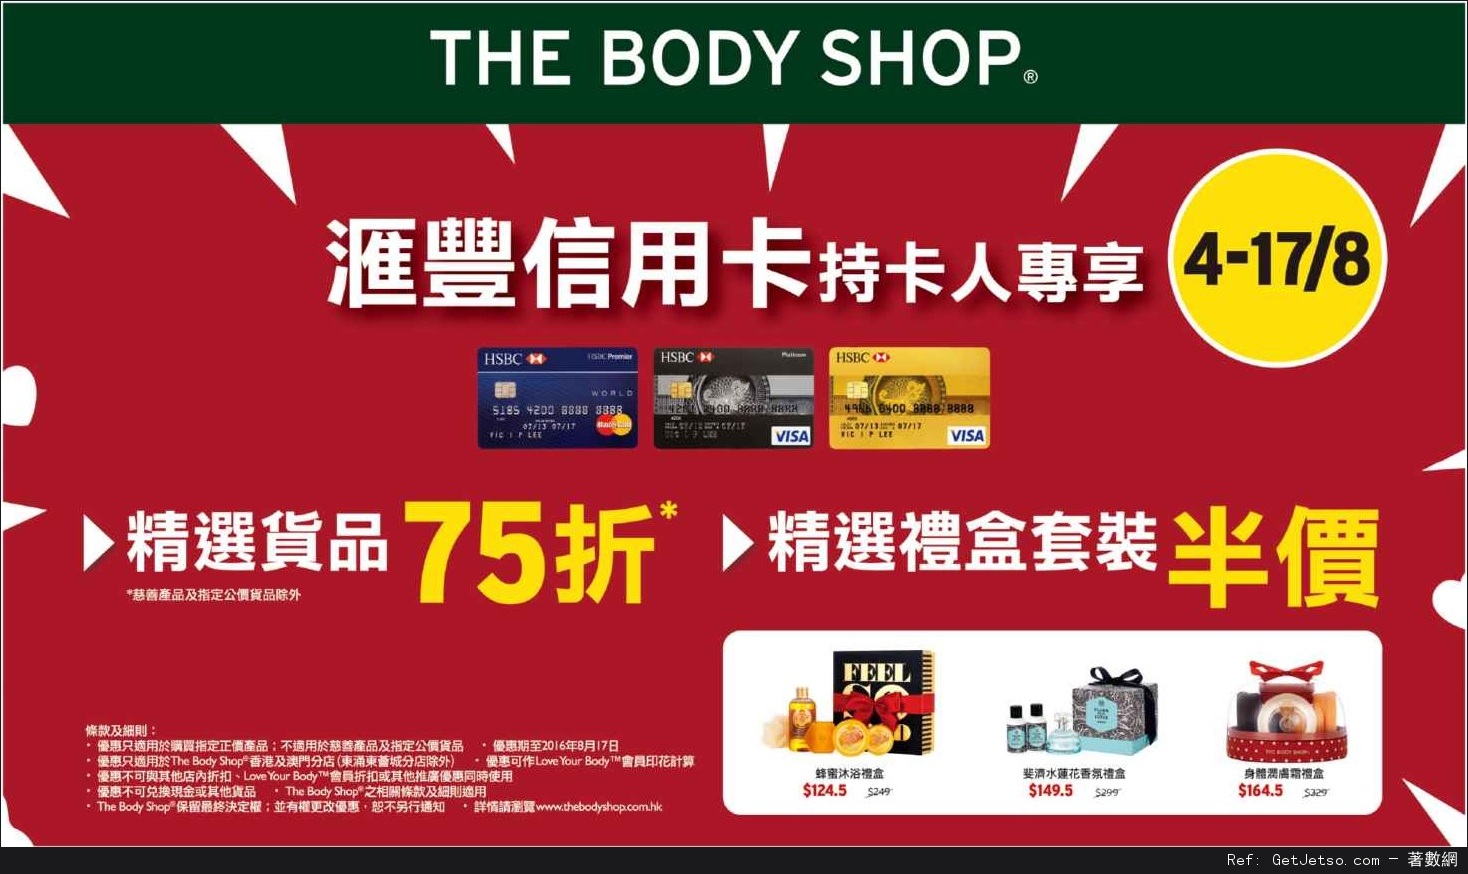 The Body Shop 低至半價優惠@滙豐信用卡(至16年8月17日)圖片1